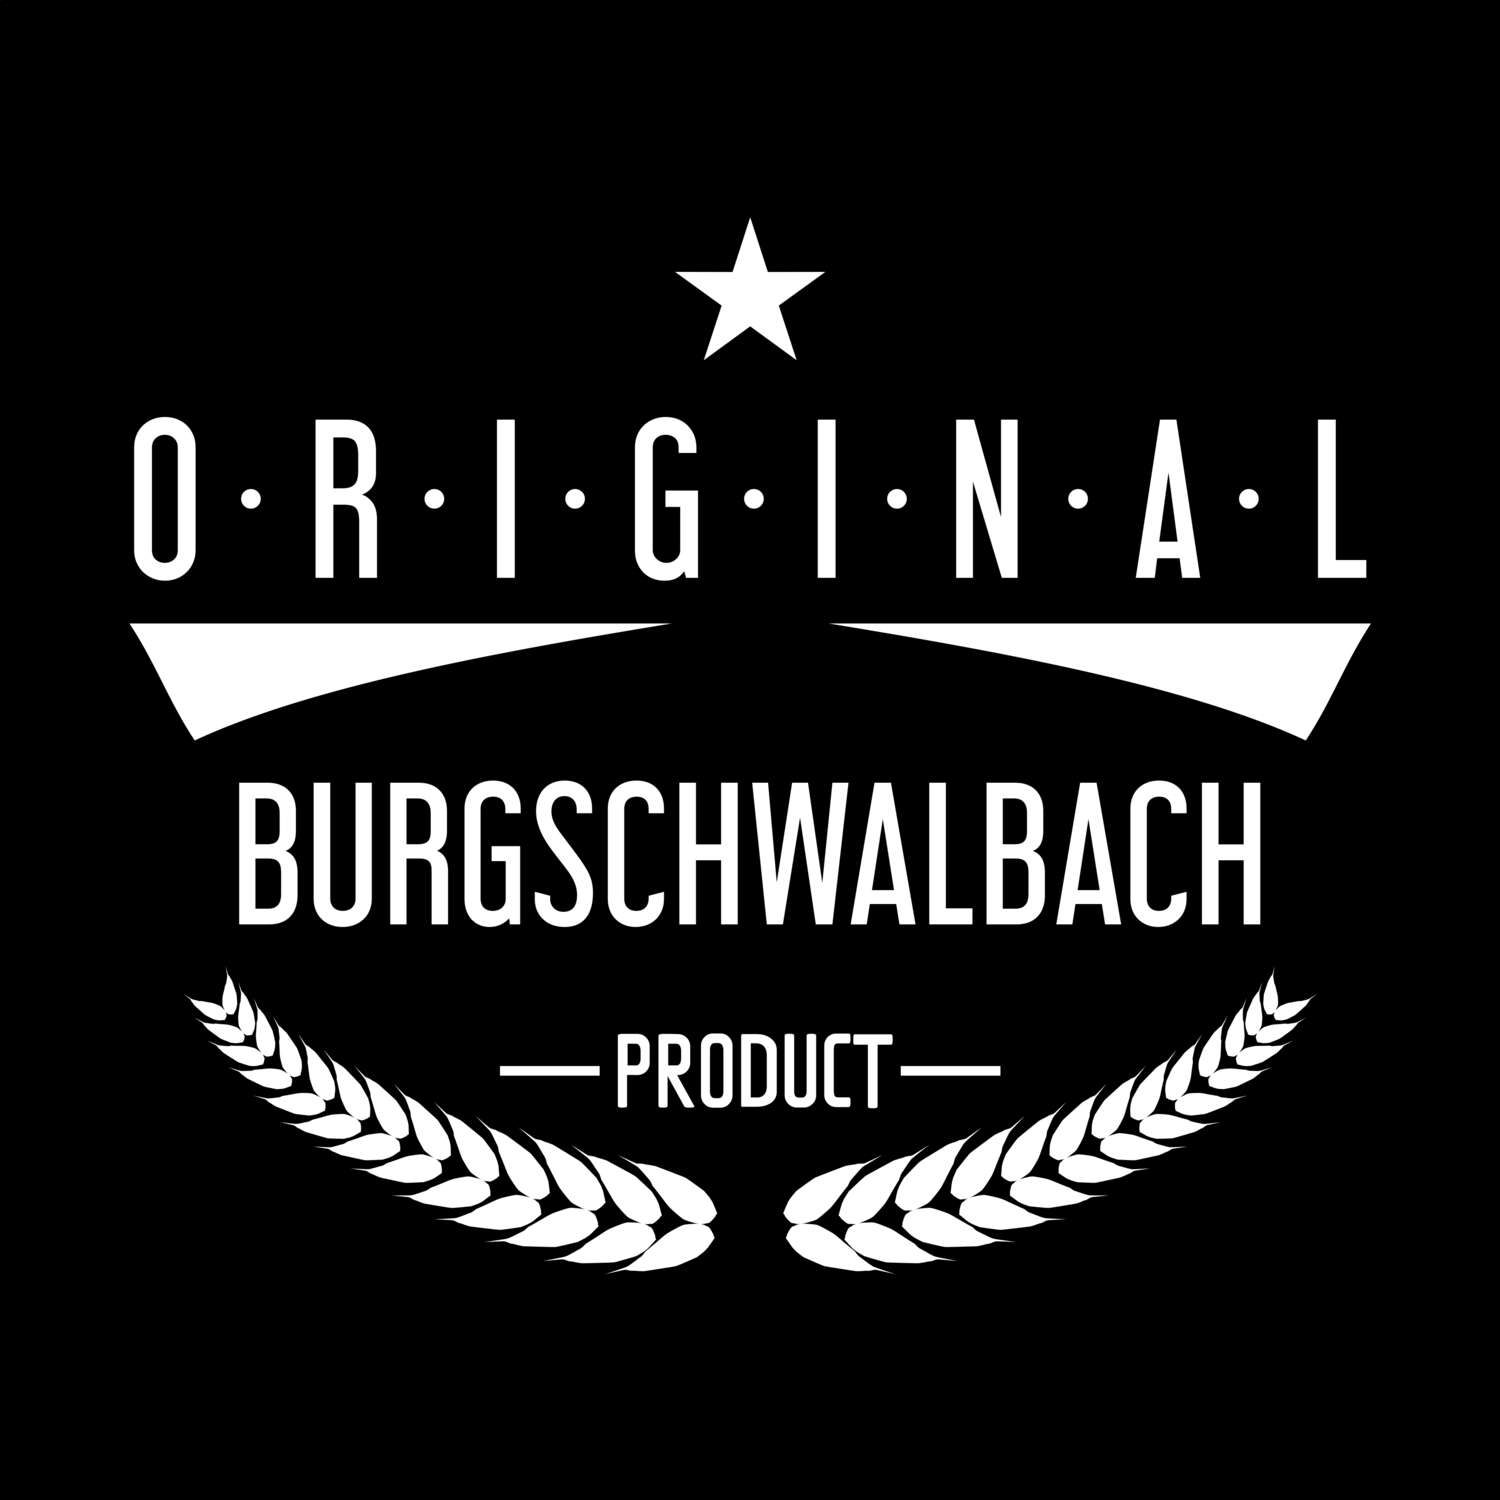 Burgschwalbach T-Shirt »Original Product«